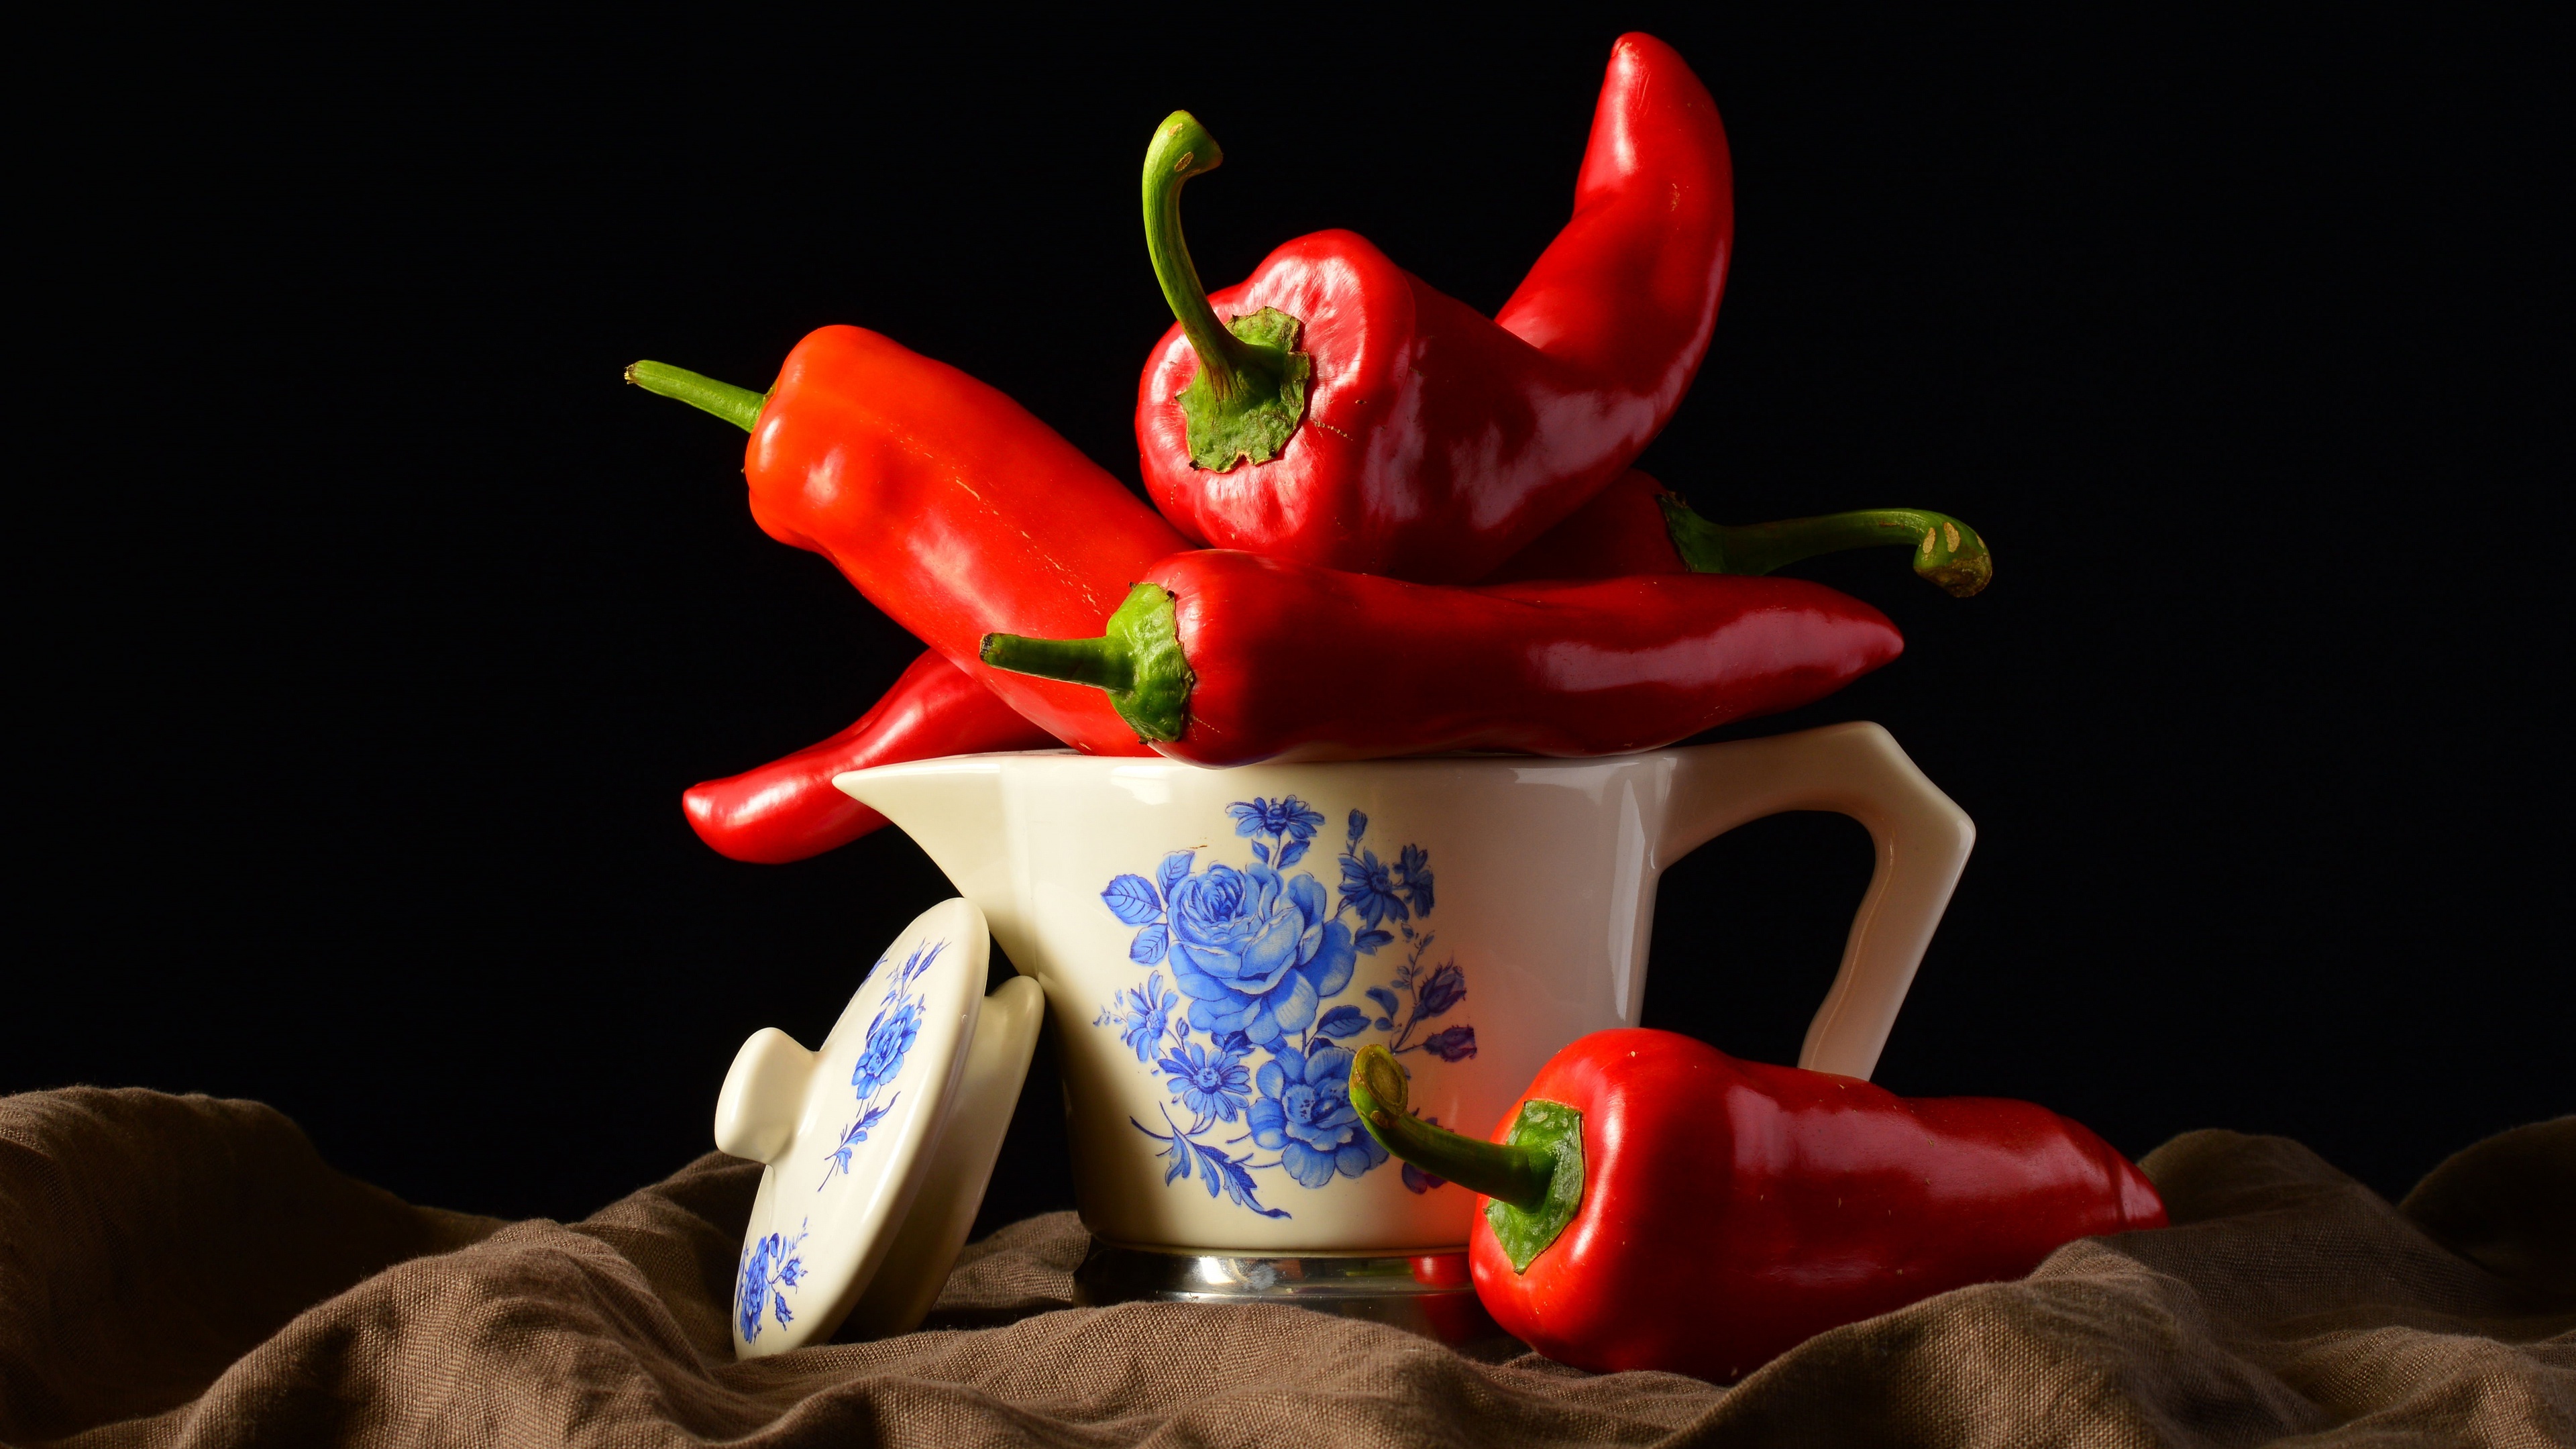 Pepper spice delight, Ultra HD wallpaper, Warm and inviting, Aroma sensation, 3840x2160 4K Desktop